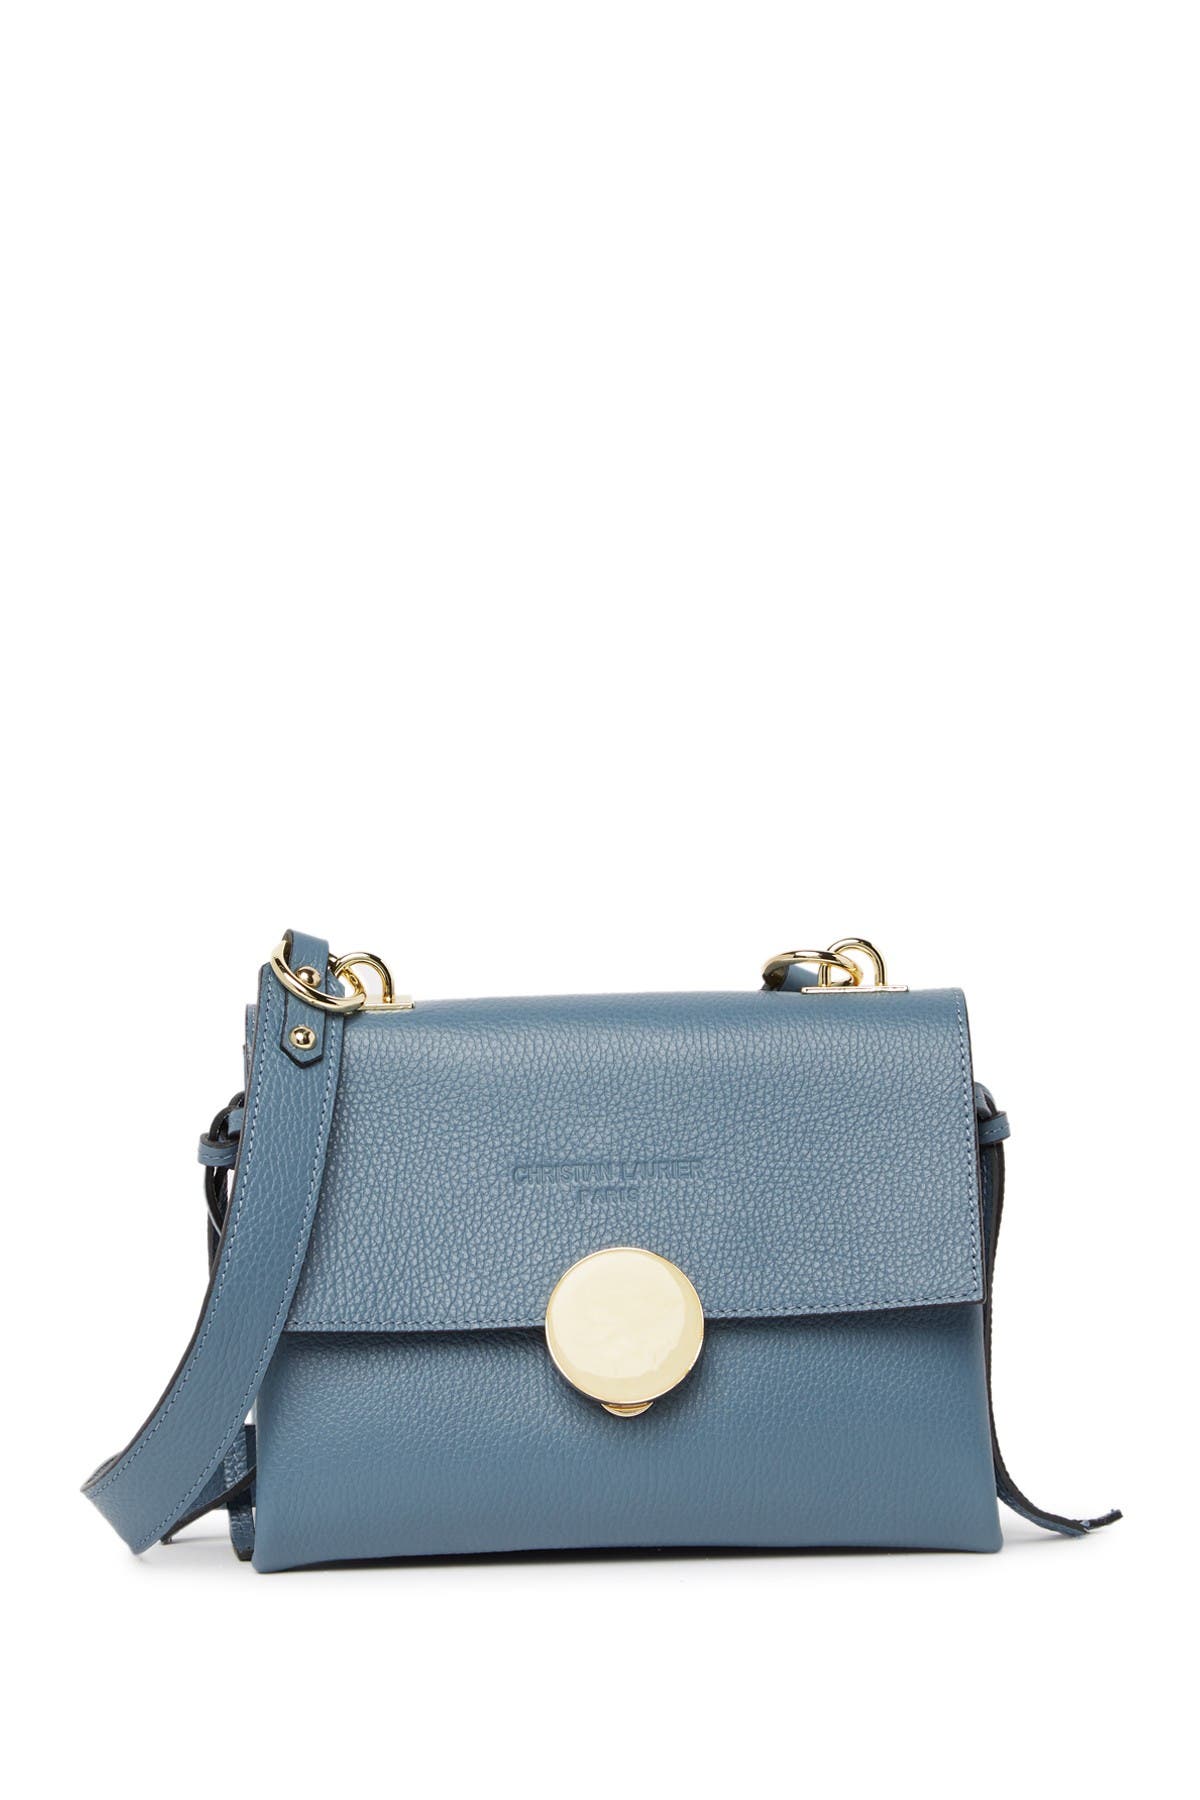 Christian Laurier Laurel Mini Leather Shoulder Bag In Blue | ModeSens